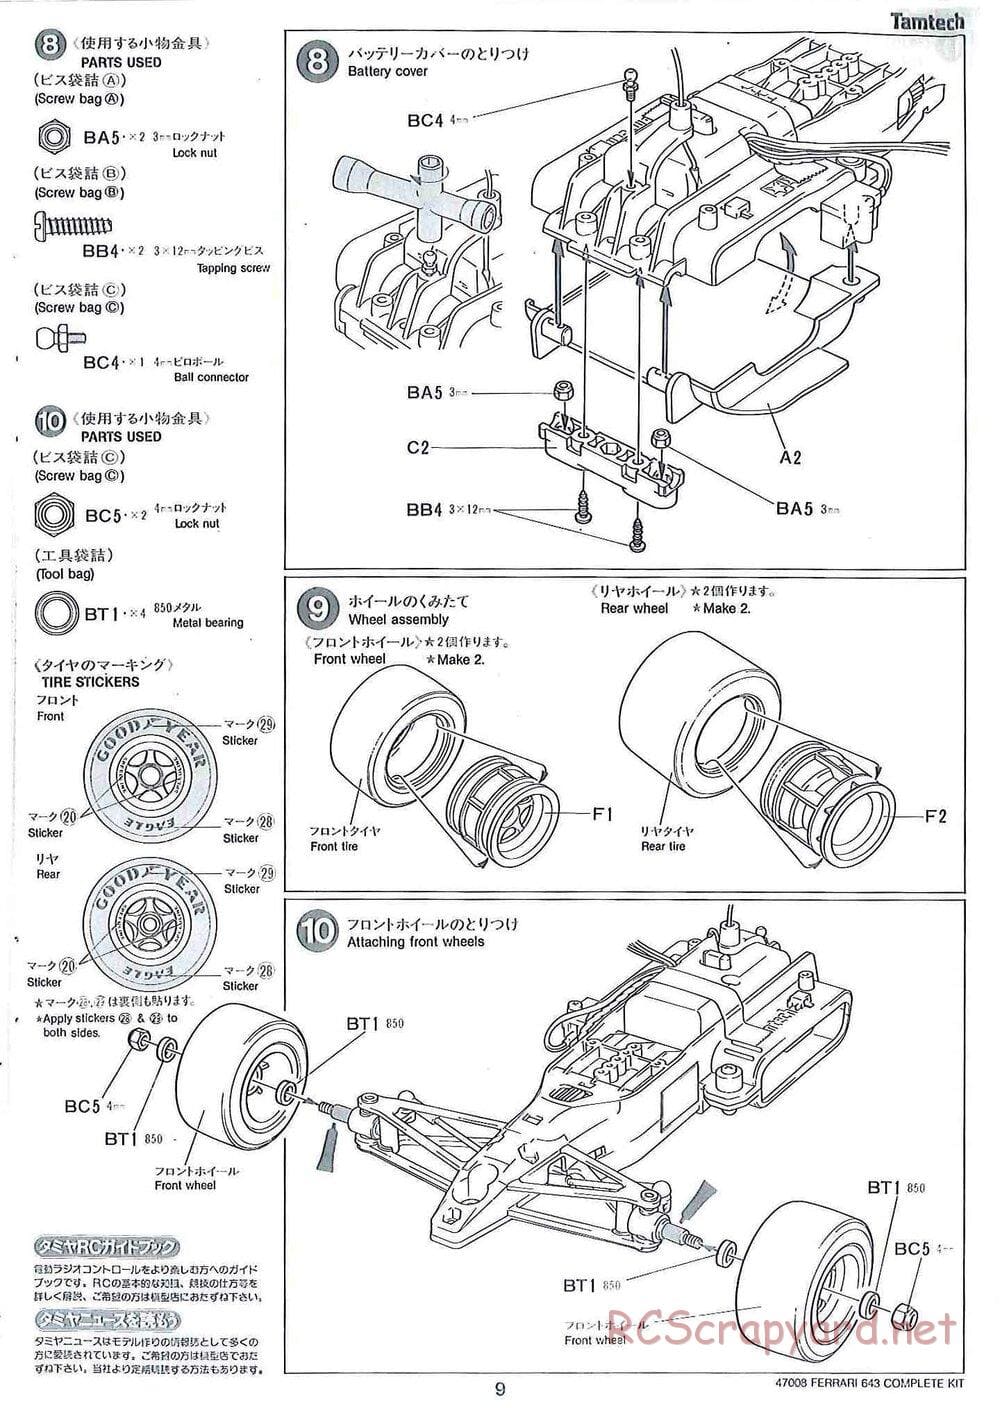 Tamiya - Tamtech - Ferrari 643 Chassis - Manual - Page 9